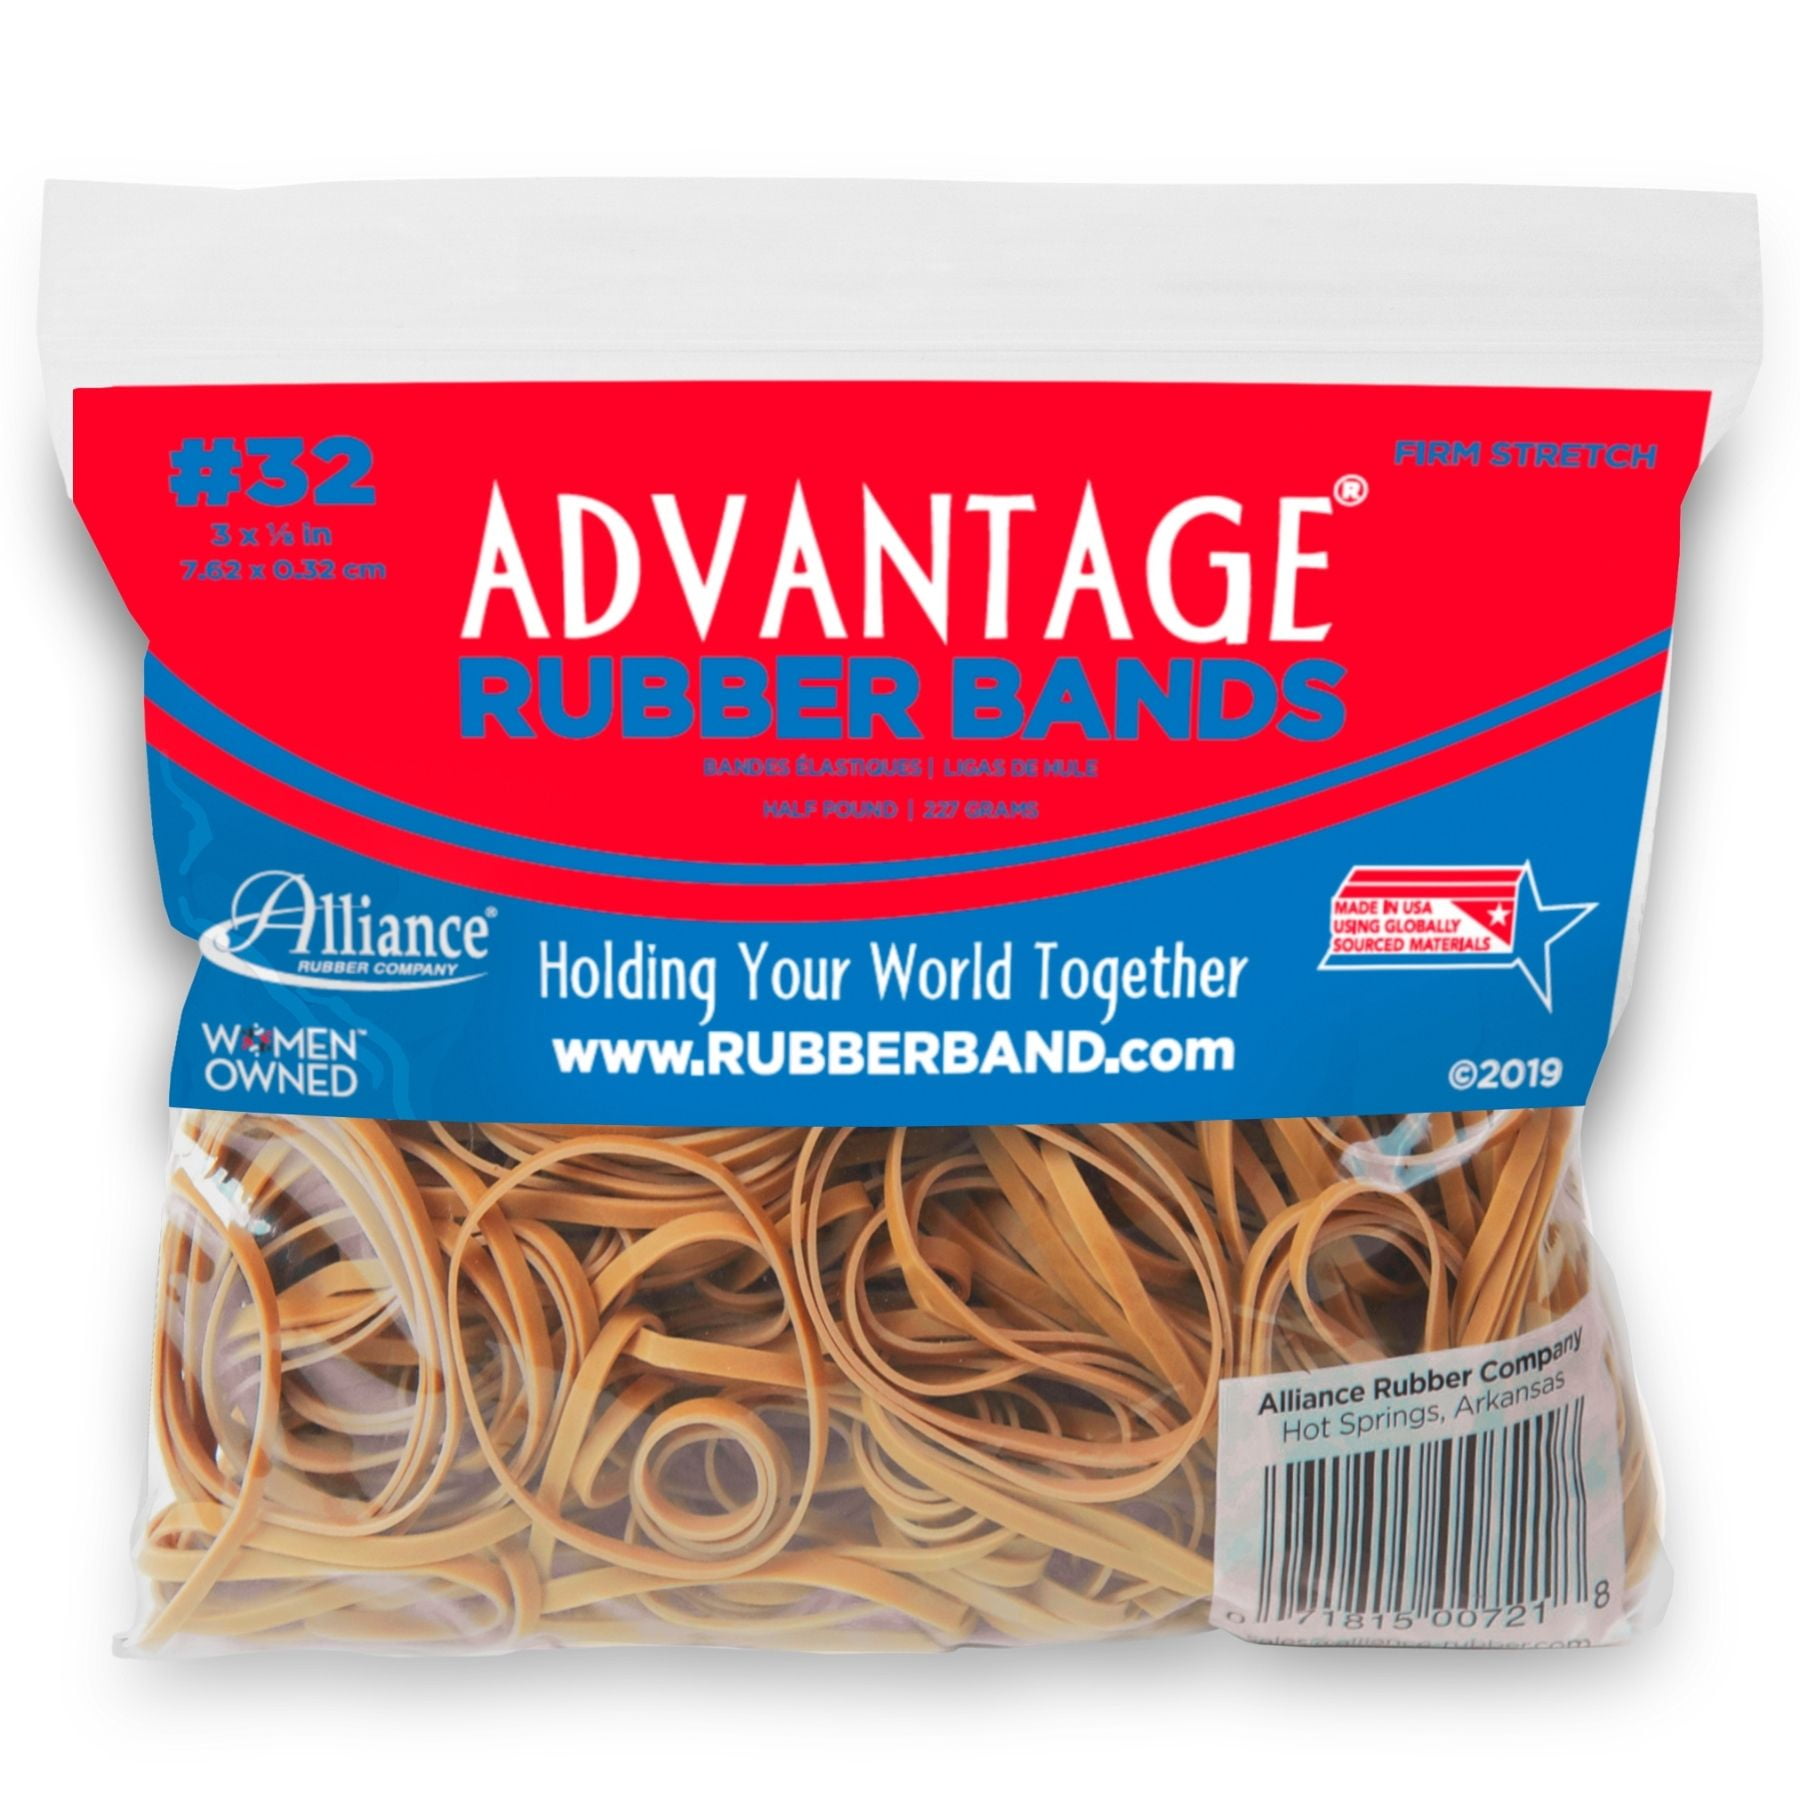 Alliance Rubber 00721 Advantage Rubber Bands Size #32 3 x 1/8, Natural Crepe 350 Bands 1/2 lb Bag Contains Approx